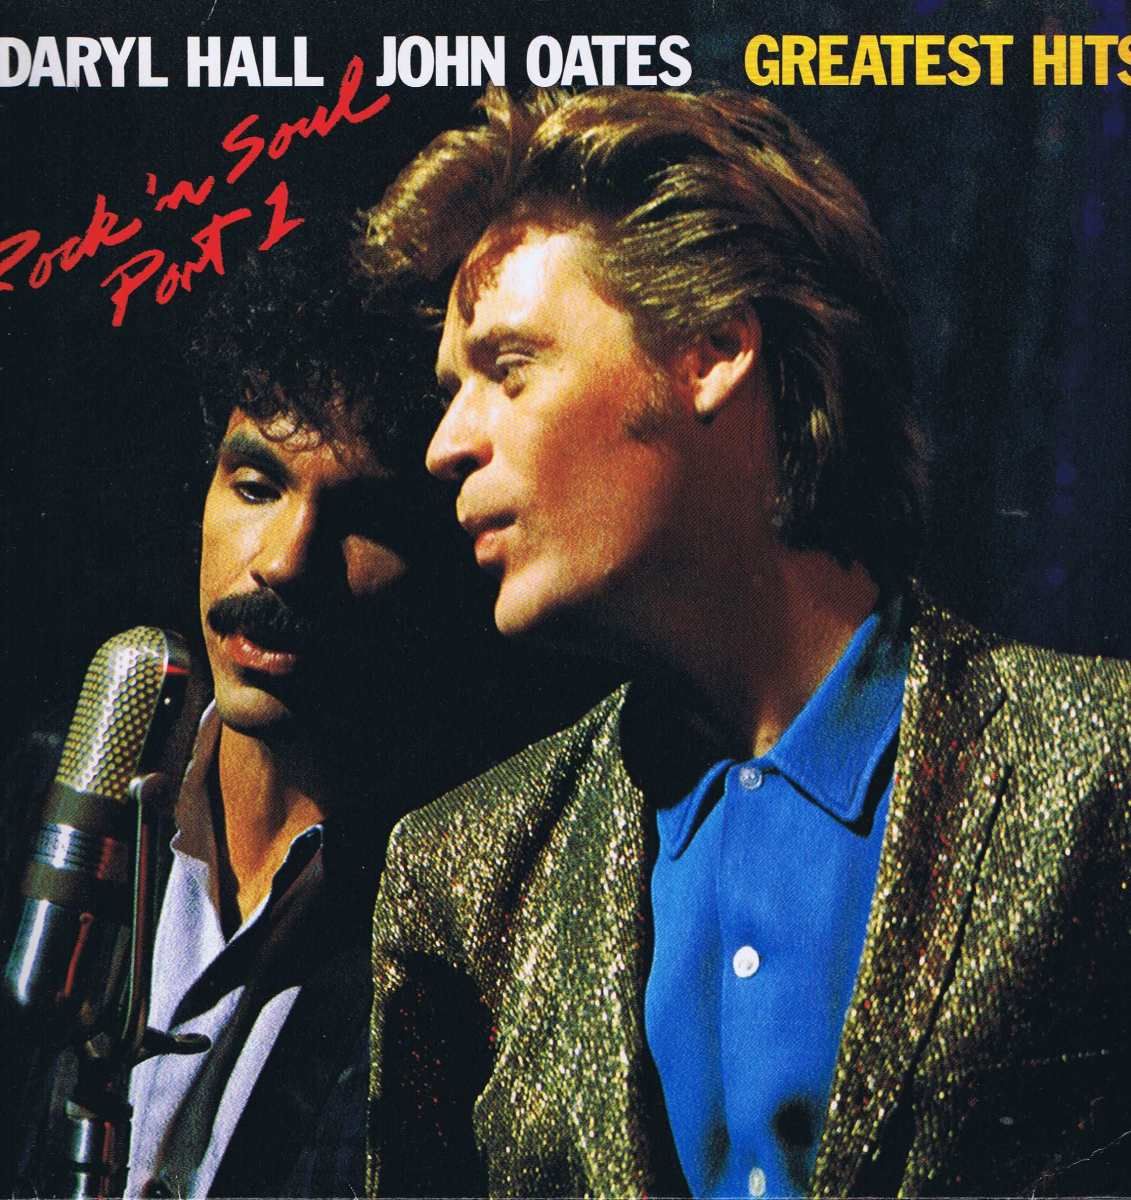 Daryl Hall & John Oates 'N Soul Part 1 Vinyl Record. Daryl hall, John oates, Music album covers